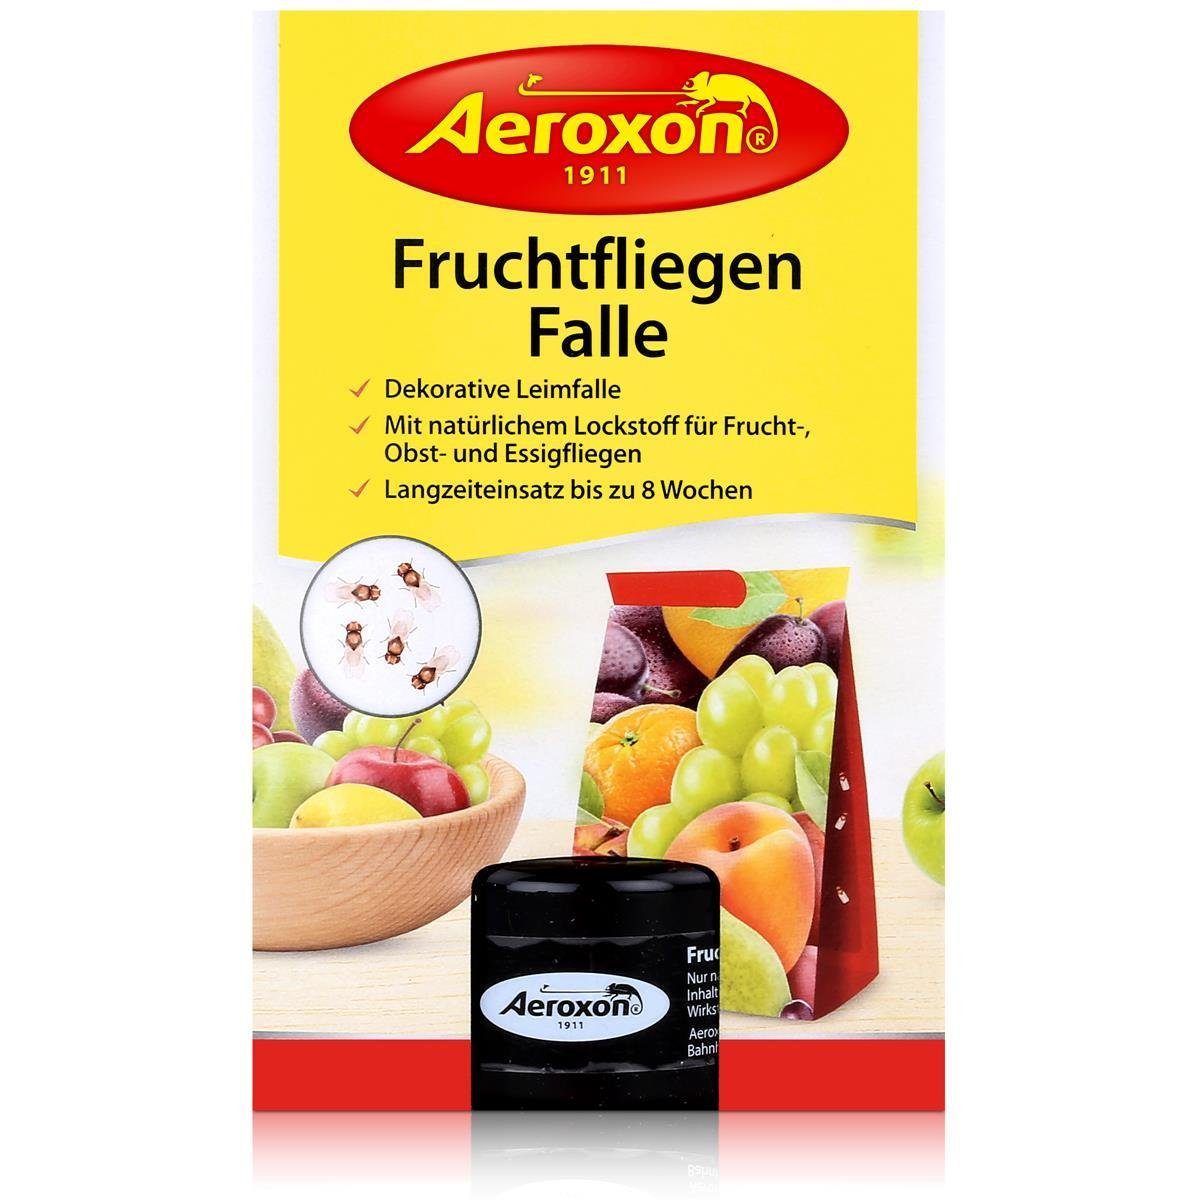 Aeroxon Insektenfalle Aeroxon Fruchtfliegen Falle 40ml - Mit dekorativer Leimfalle (1er Pack